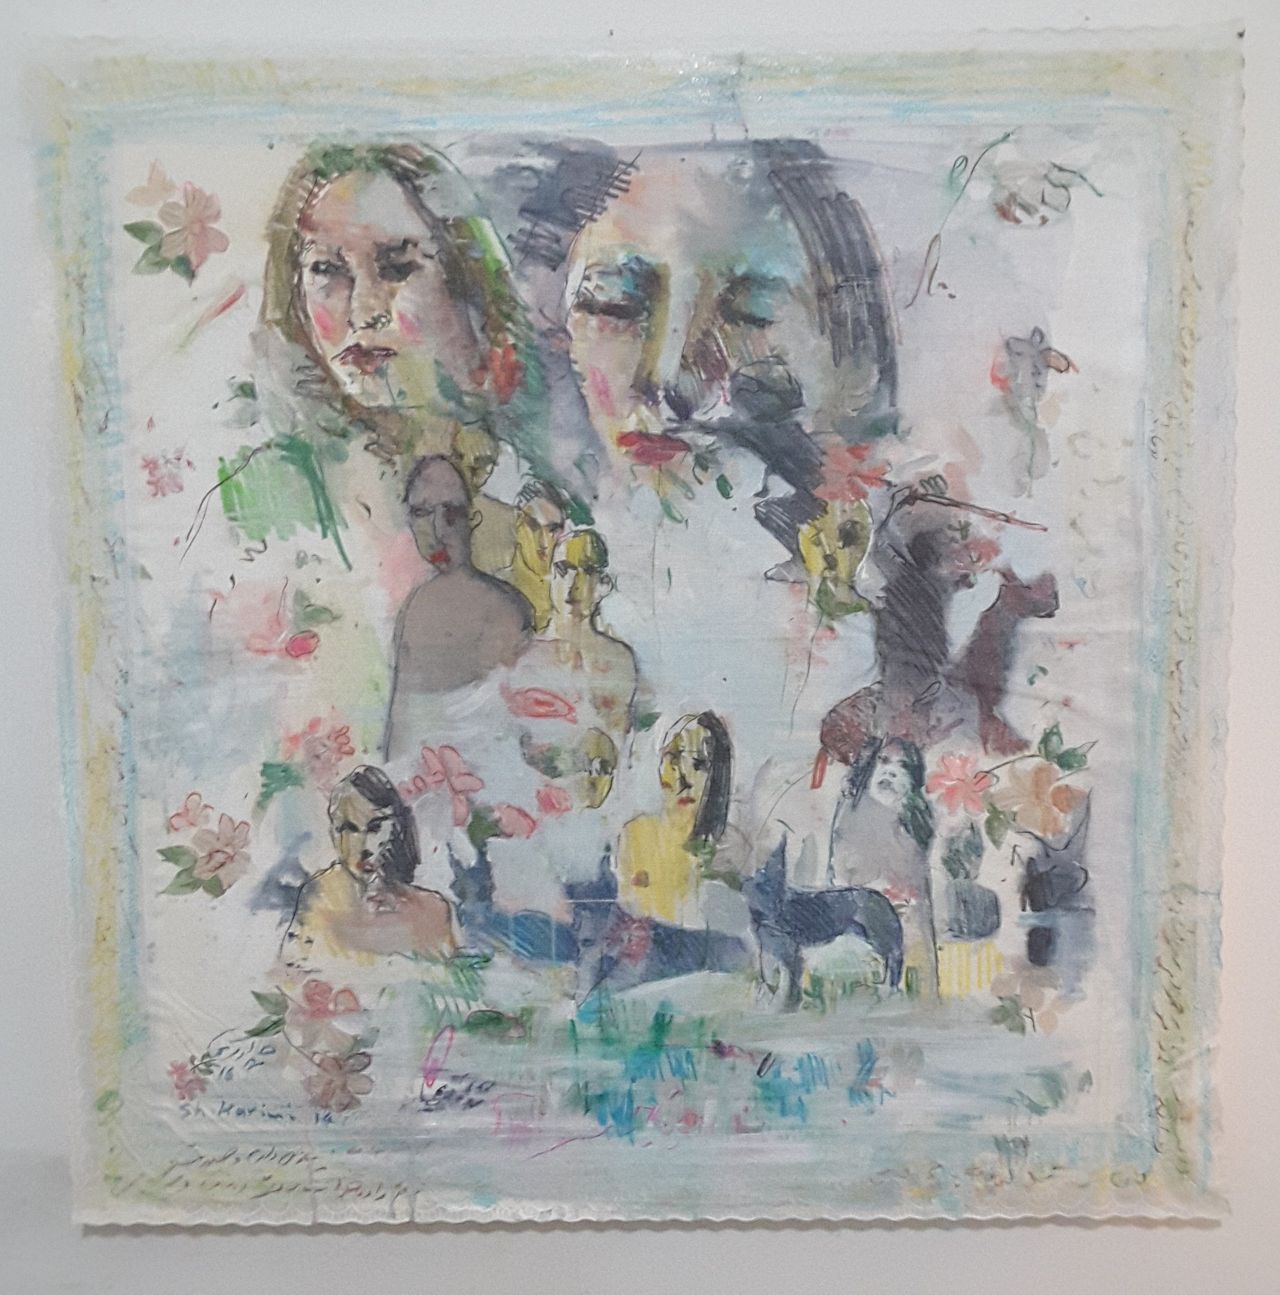 Shahram Karimi, Untitled, 2016, mixed media on canvas